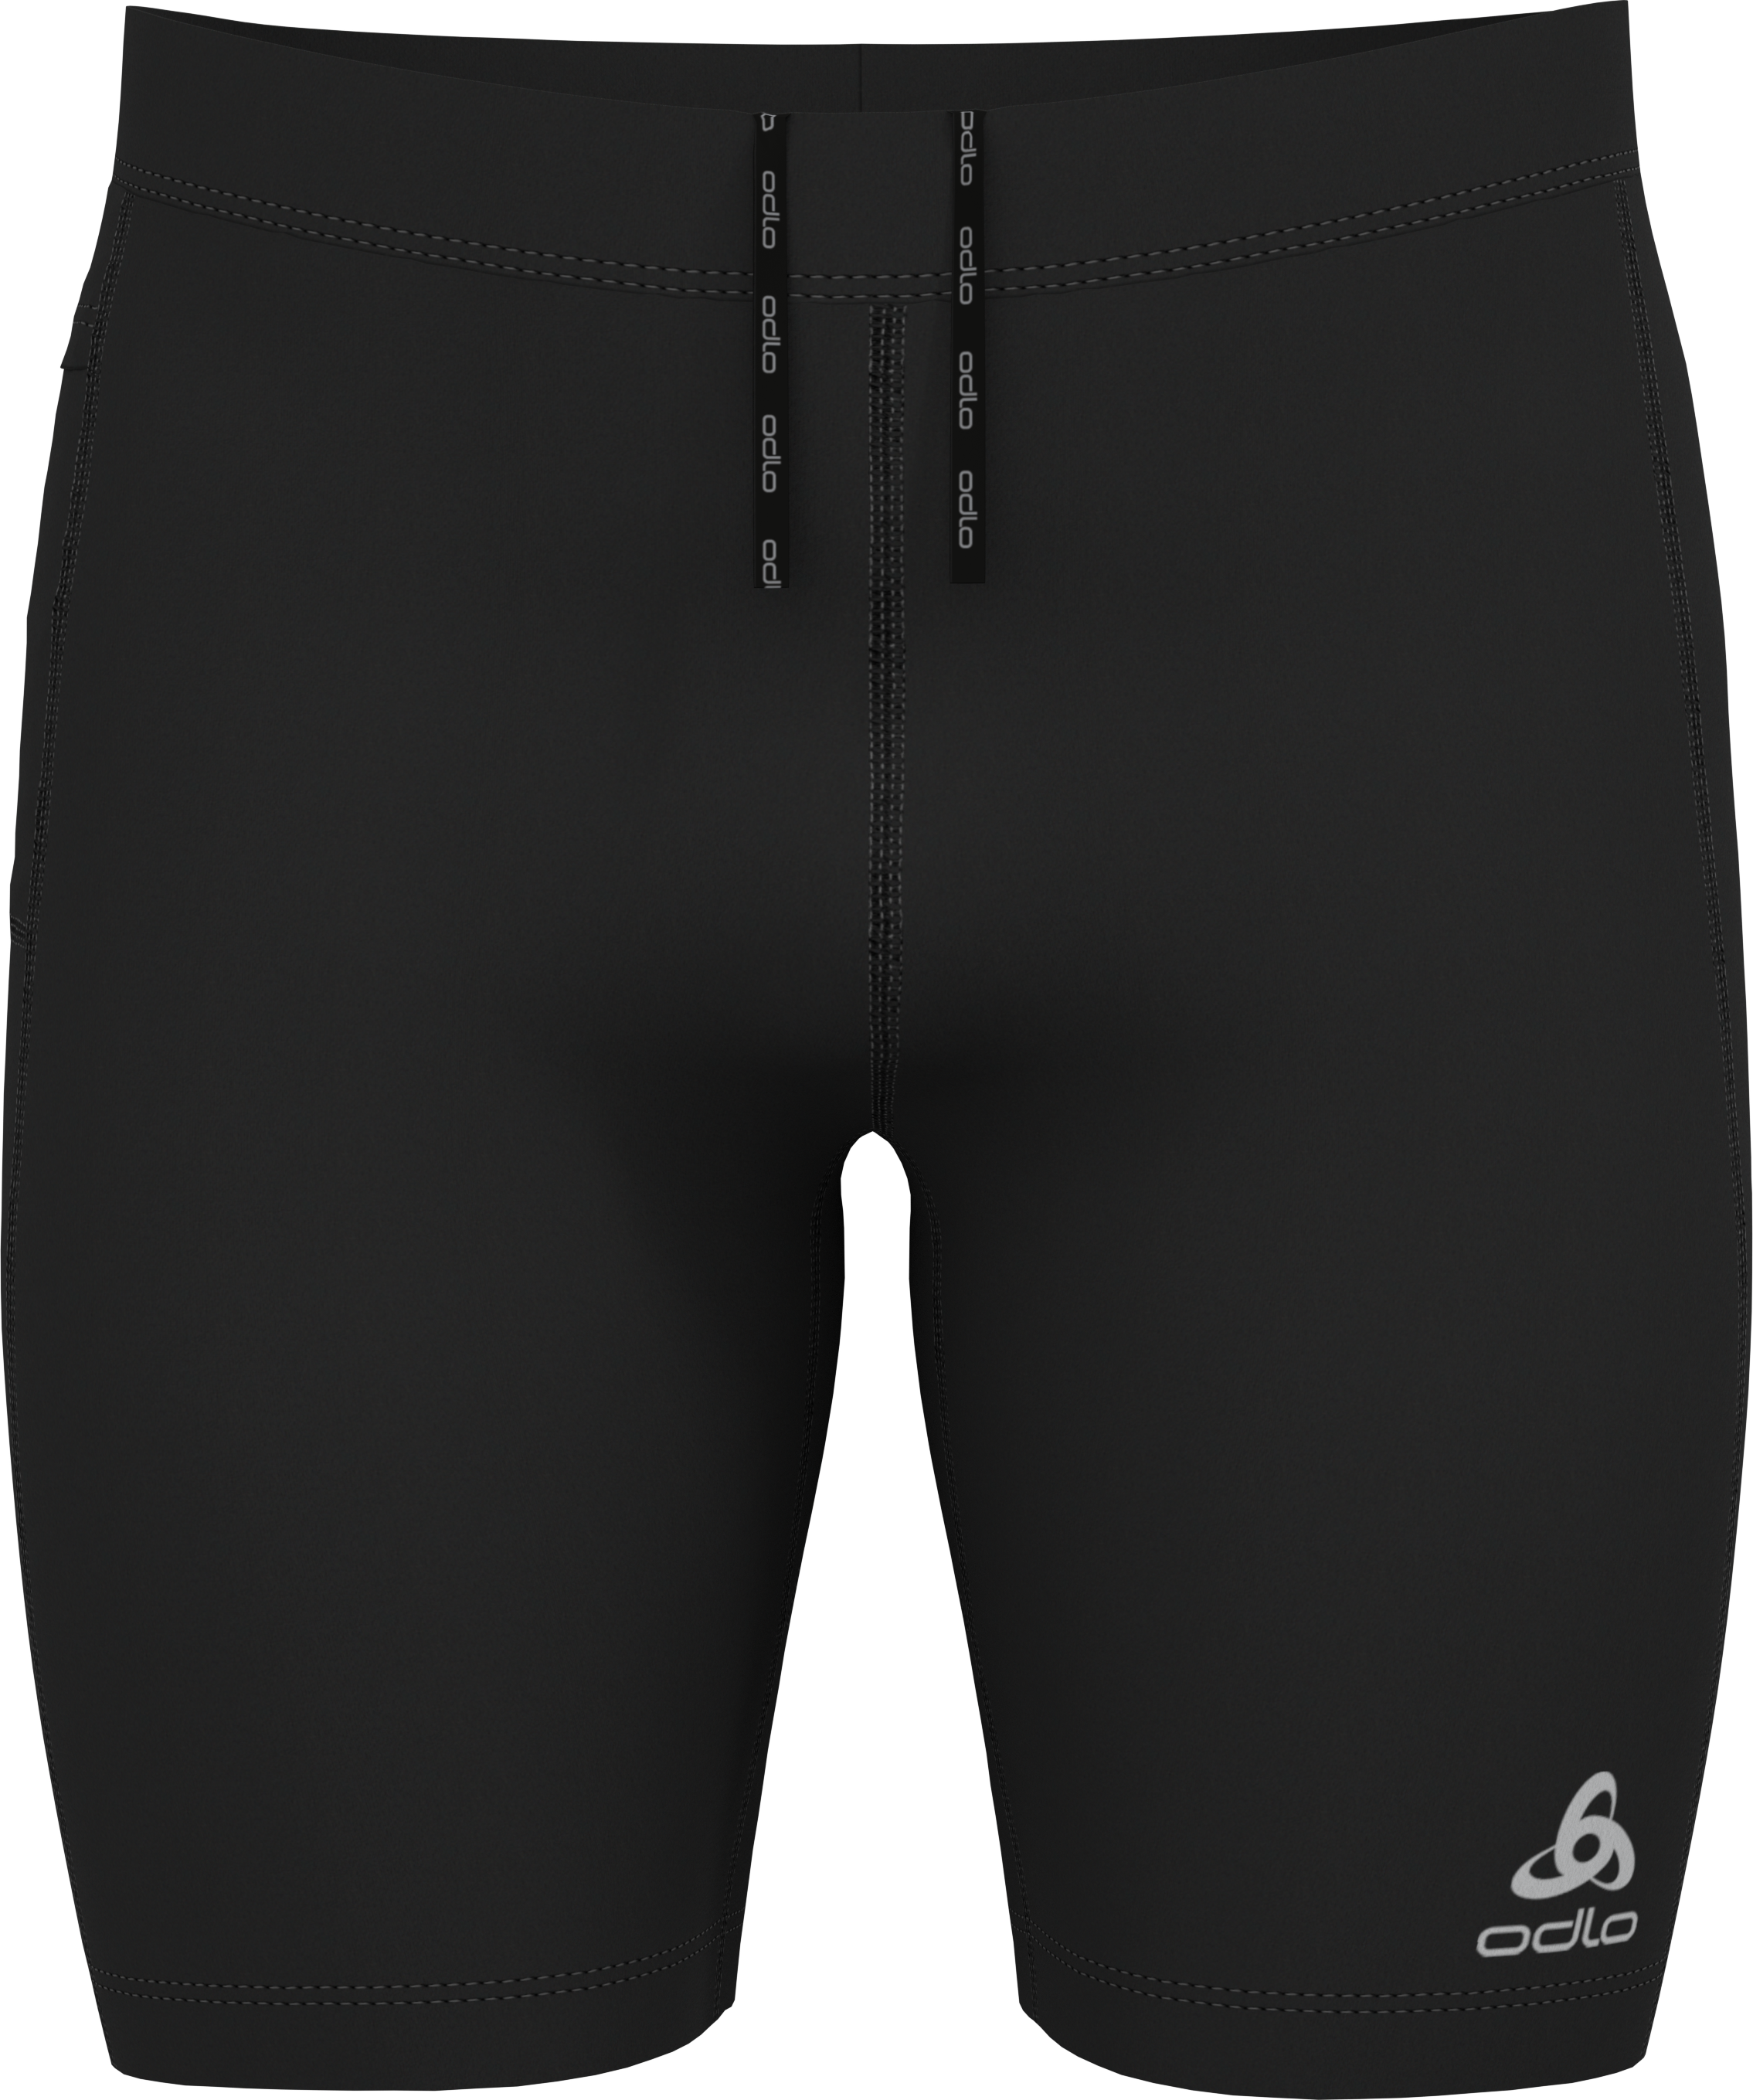 Odlo Men’s The Essential Tight Shorts Black